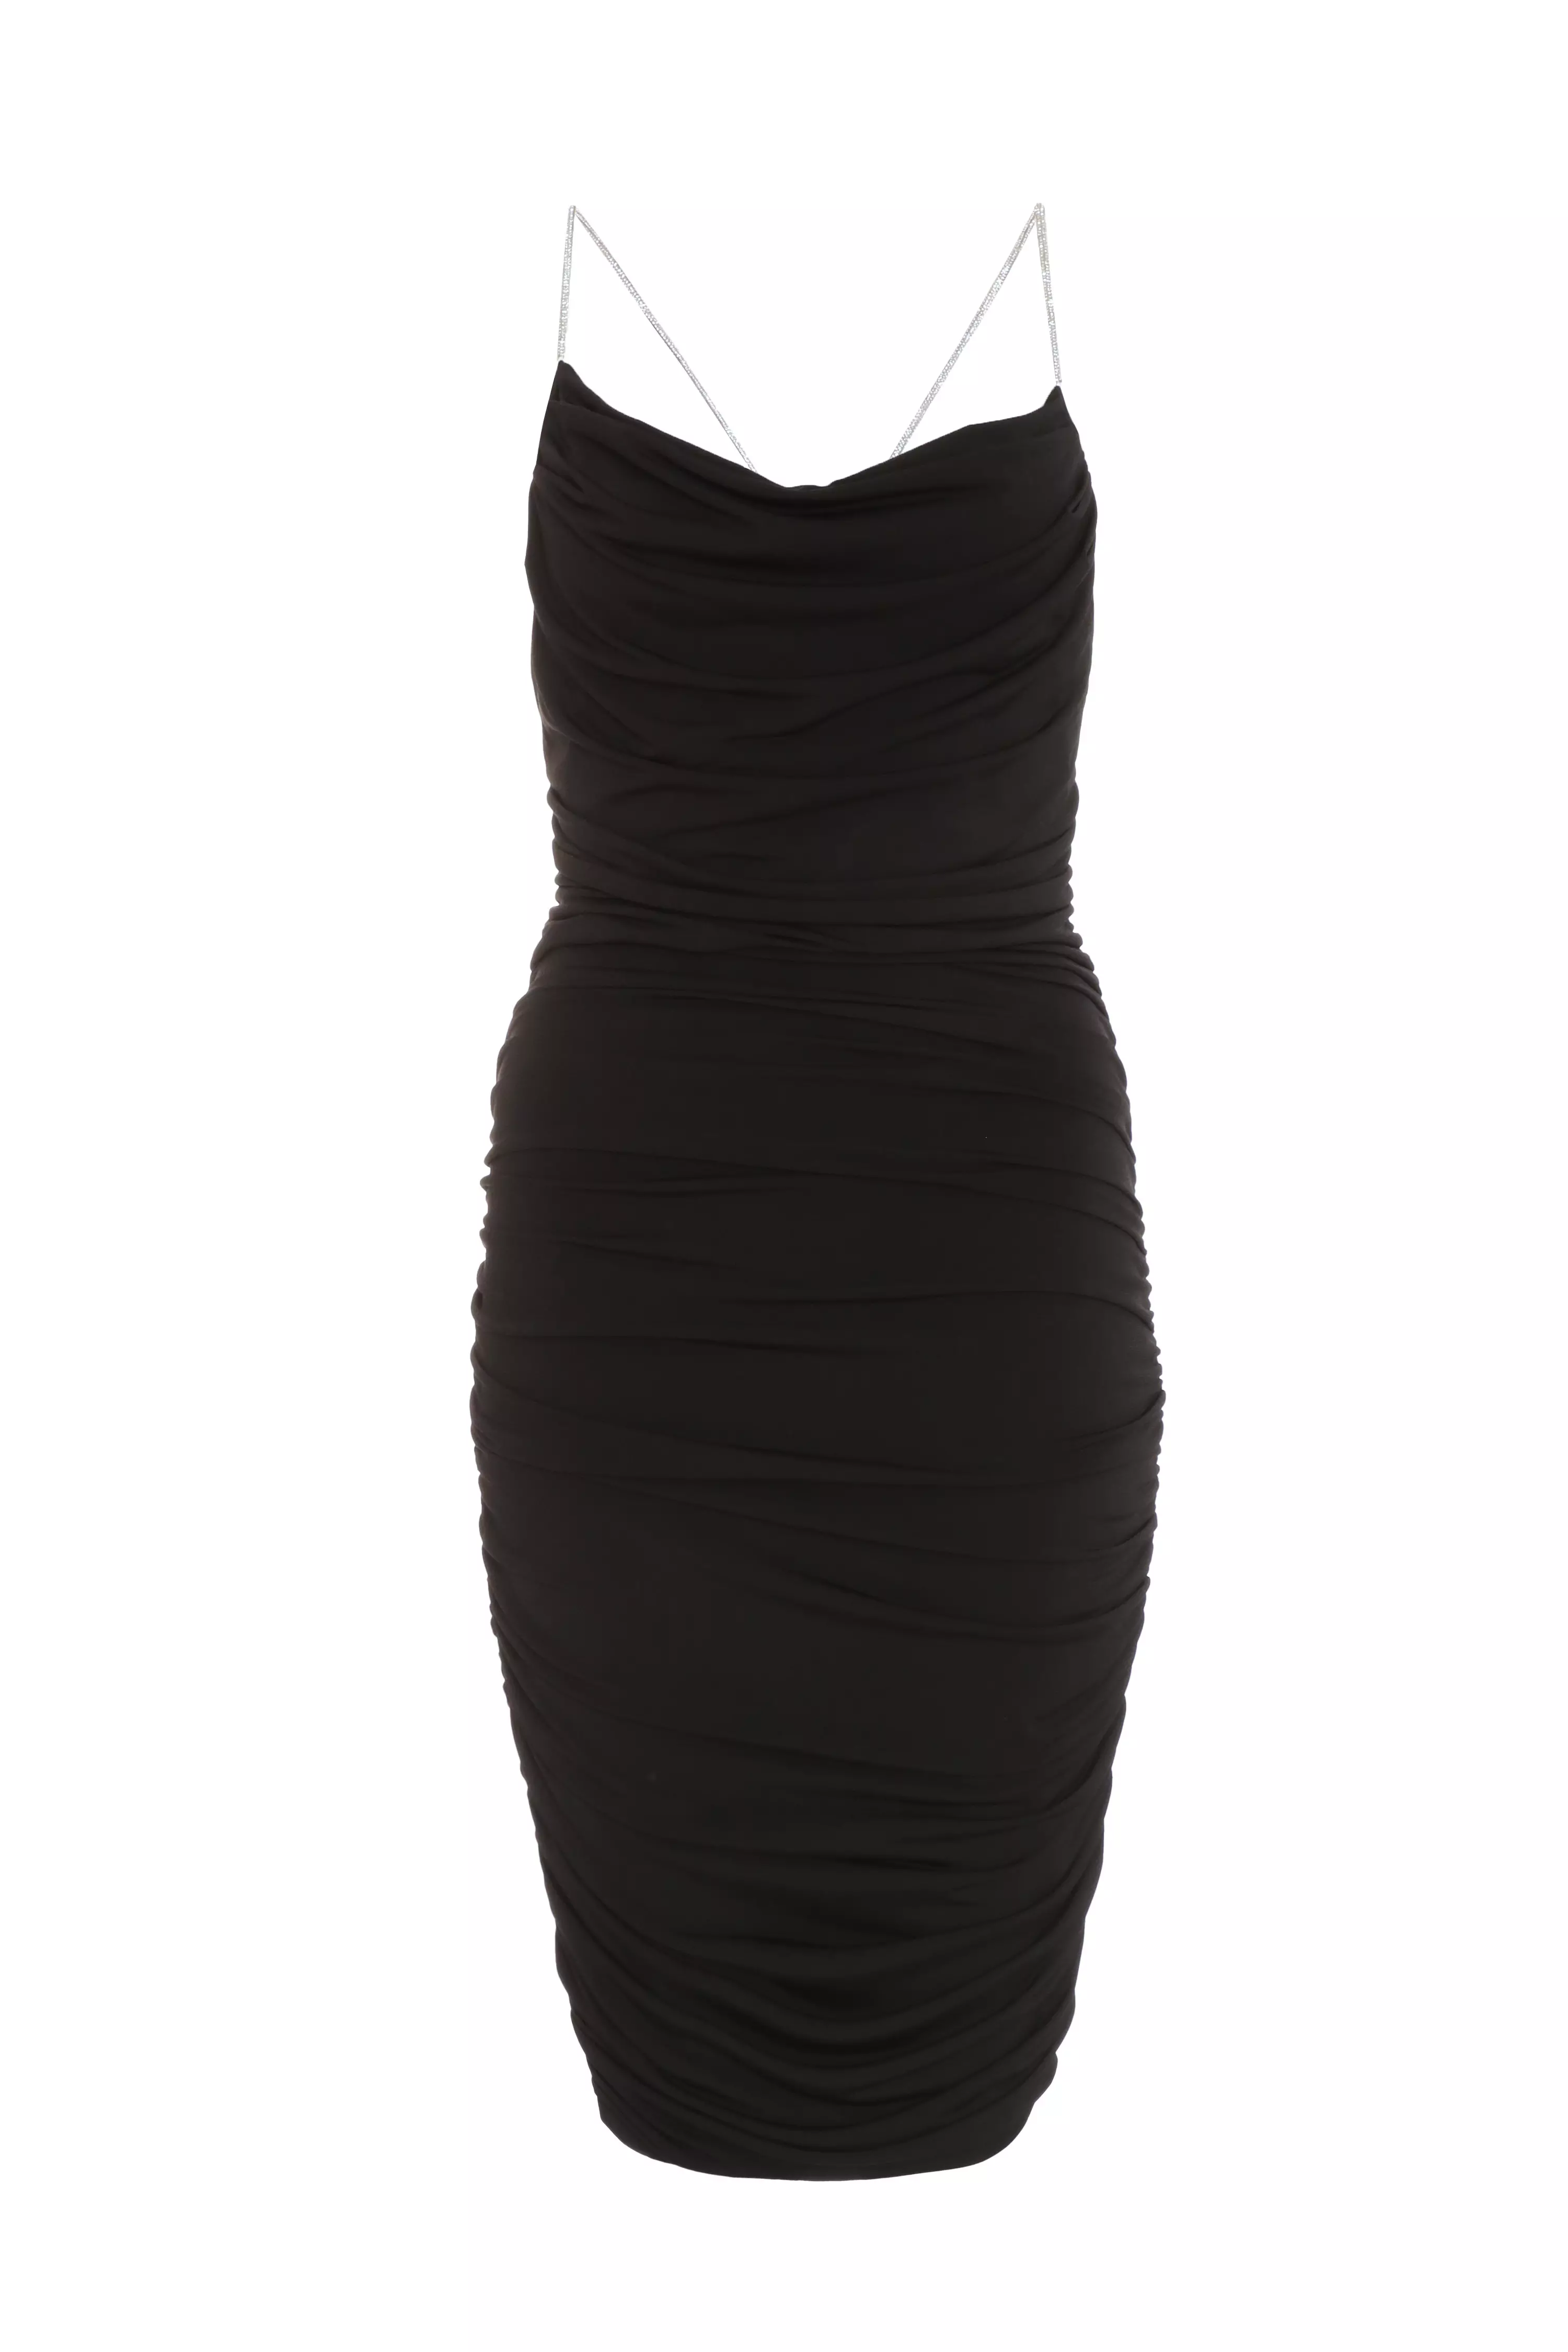 Black Diamante Strap Bodycon Mini Dress - QUIZ Clothing